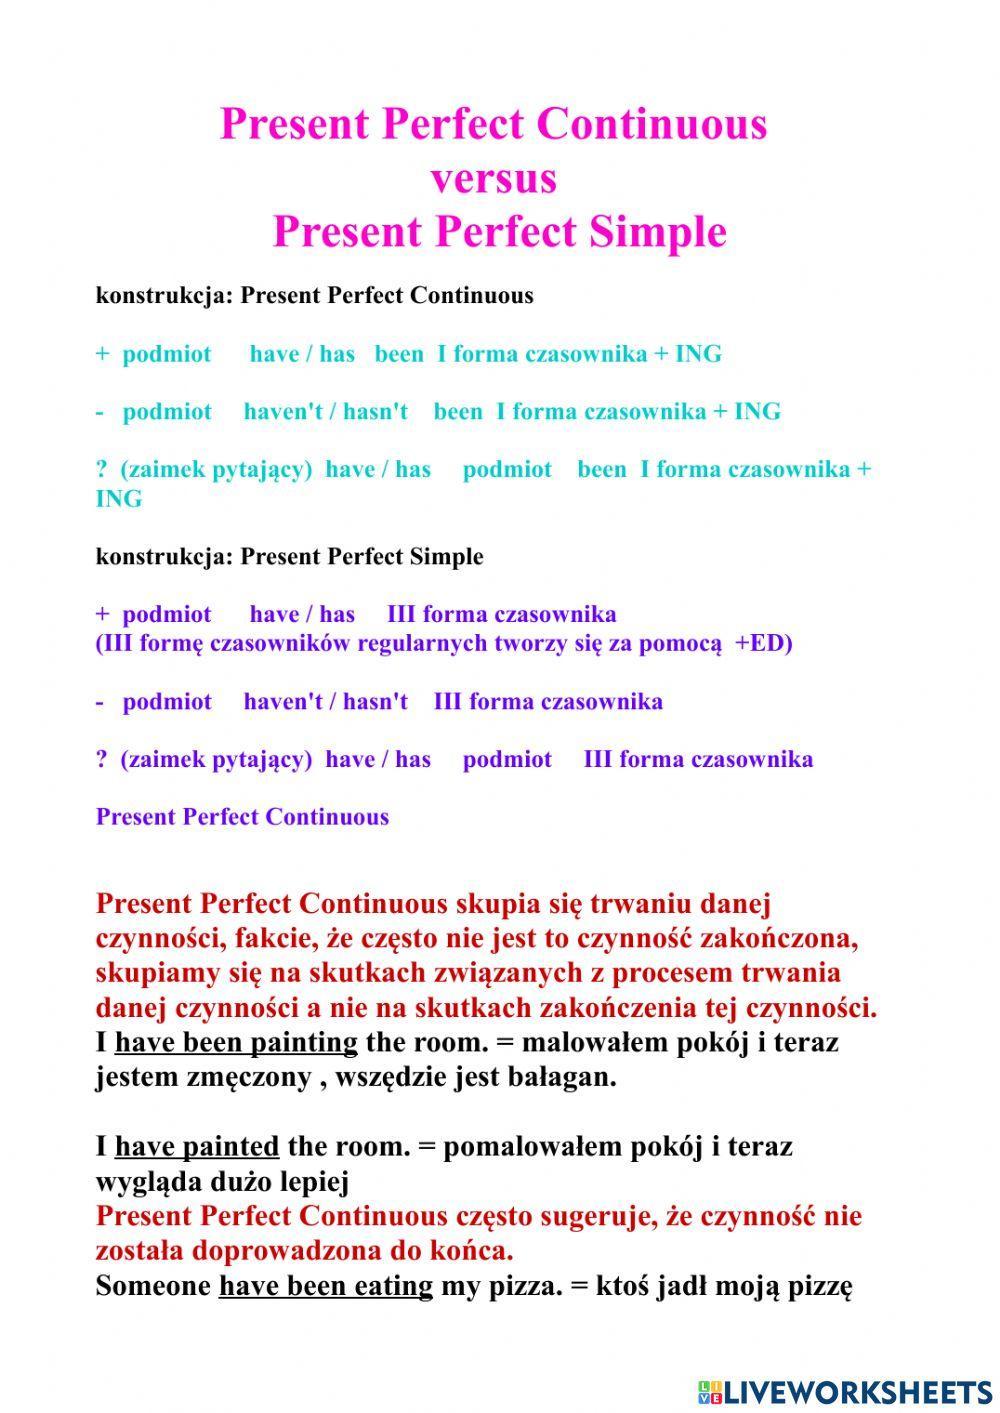 Present perfect continuous vs present perfect simple